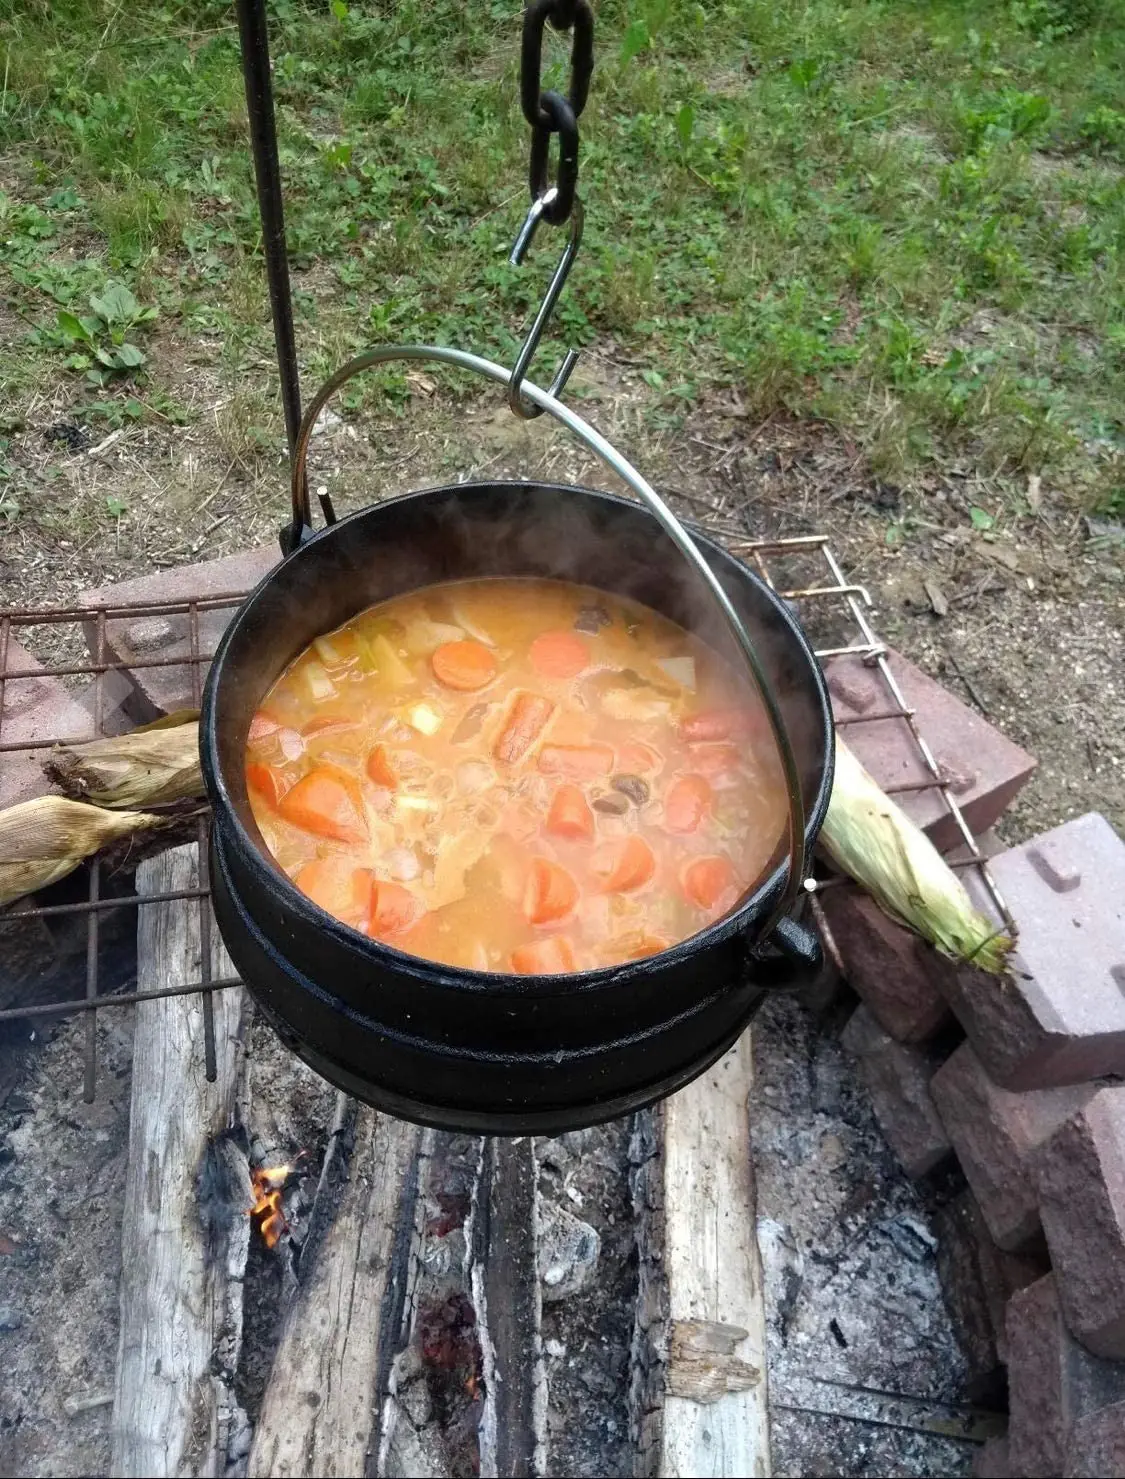 South Africa 3 Legs Cast Iron Pot Cast iron Potjie Pot Three Legged  Outdoor camping Cookware soup Pot